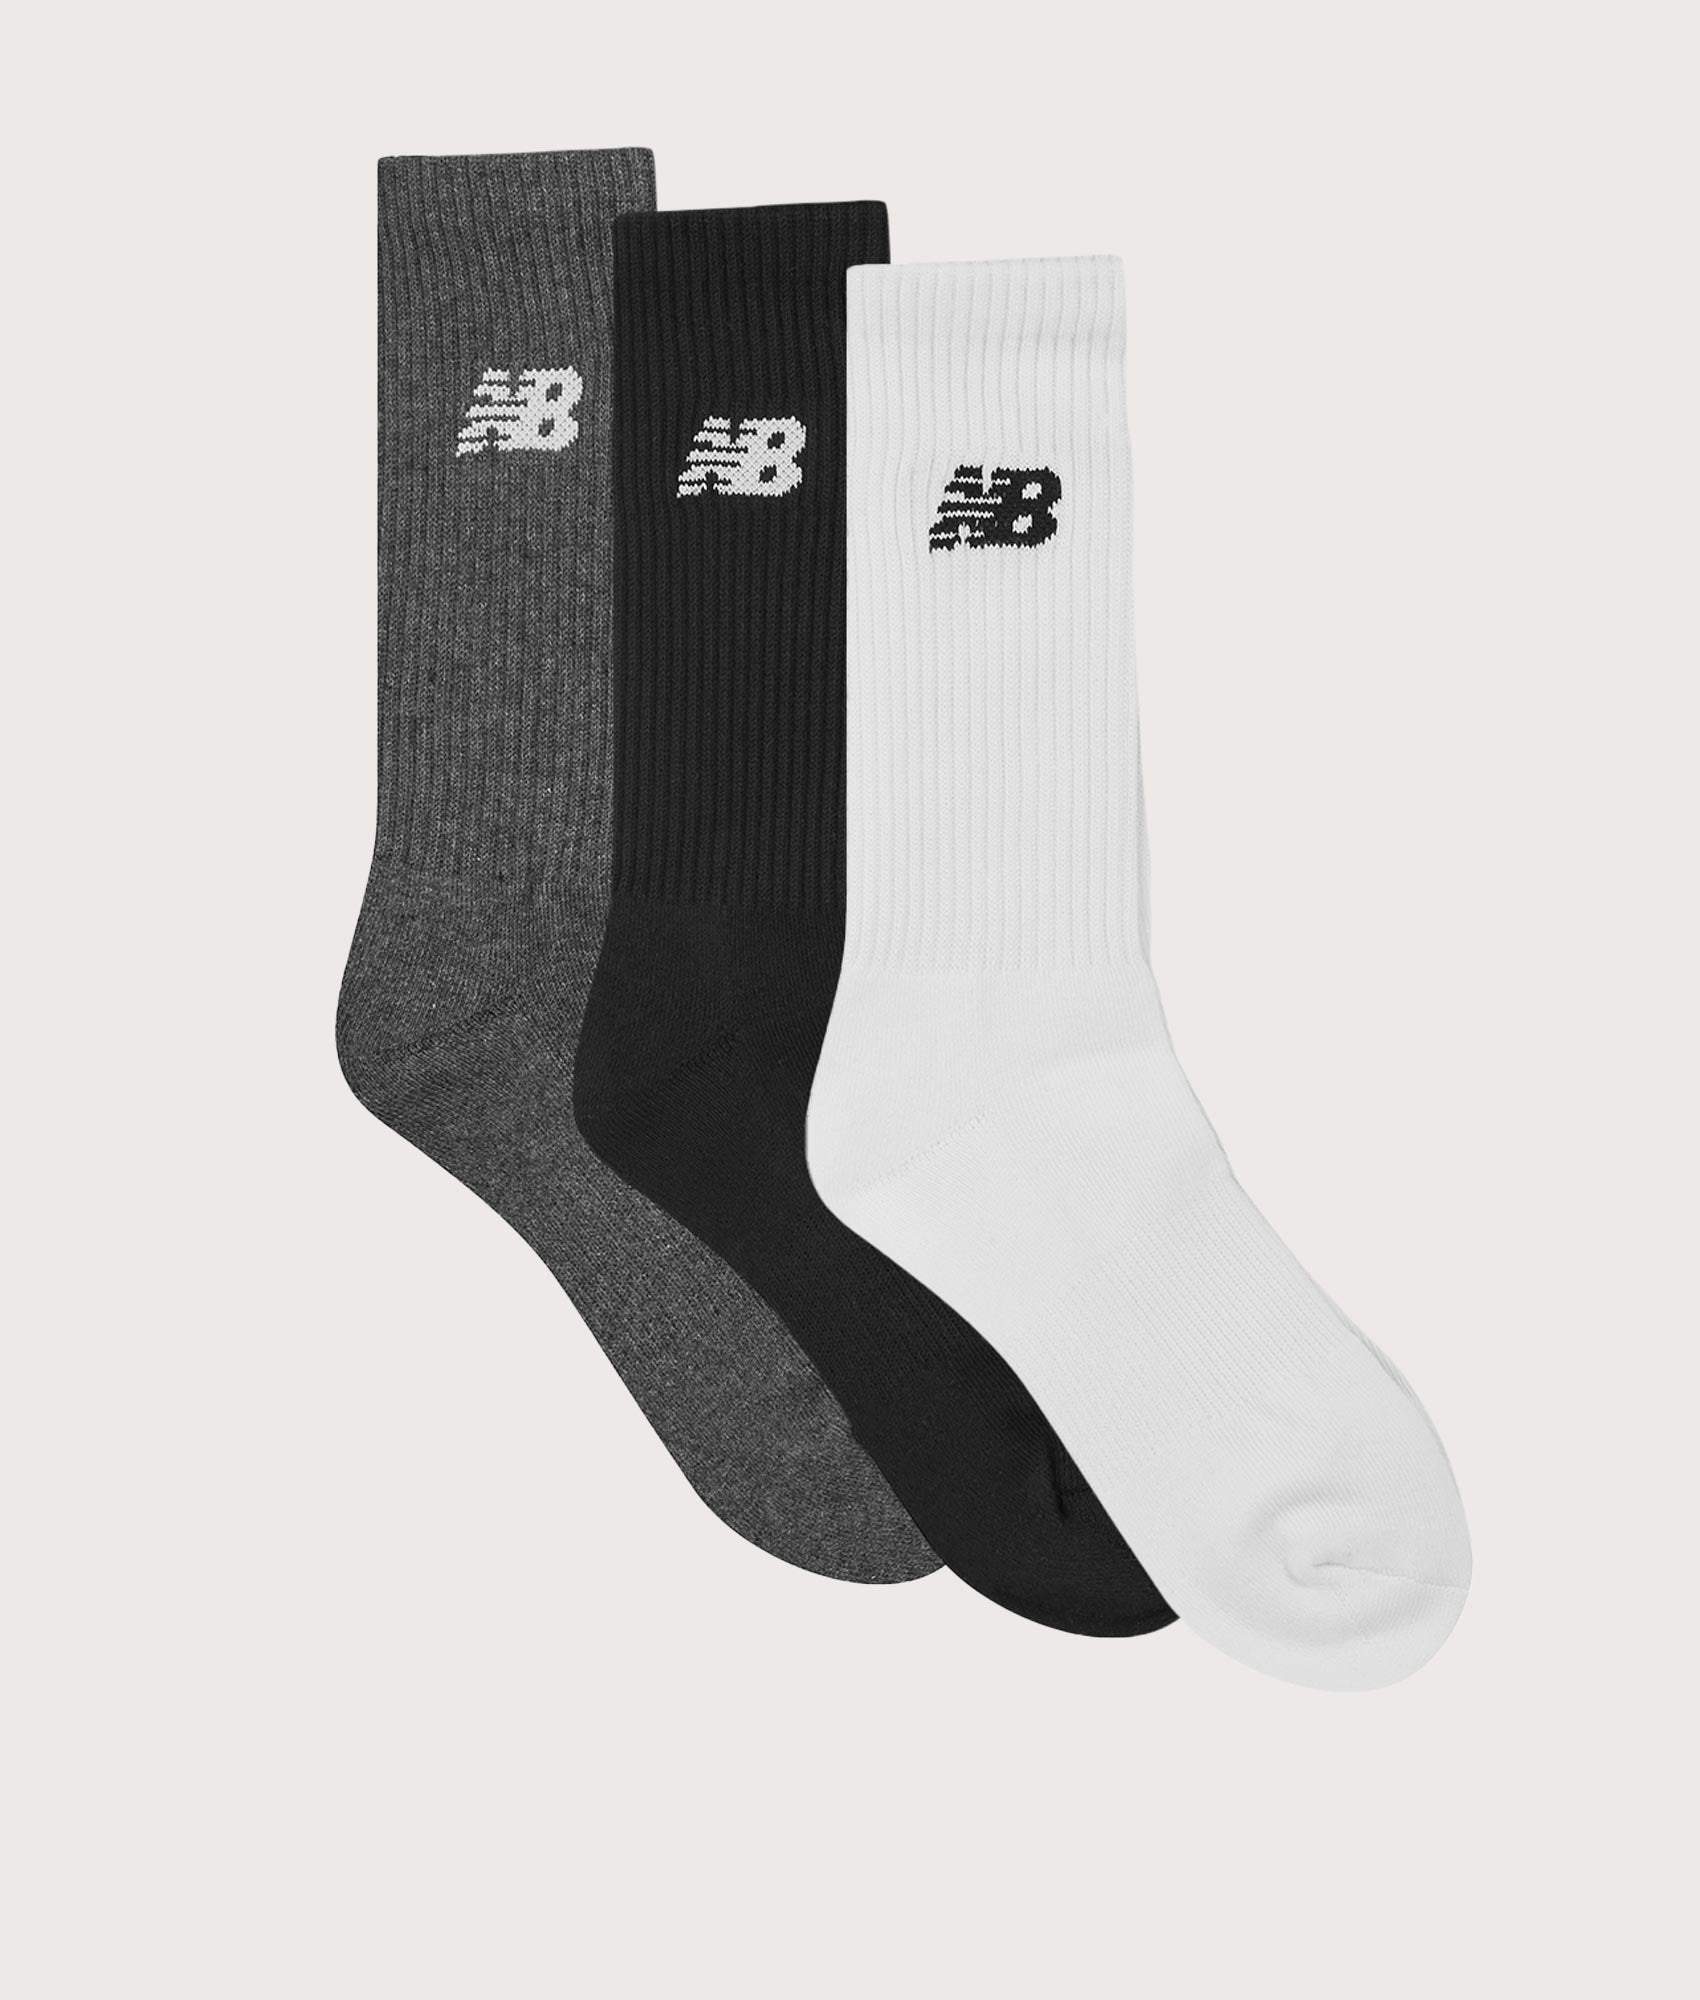 New Balance Mens NB Everyday 3 Pack Crew Socks - Colour: WM White Multi - Size: Large